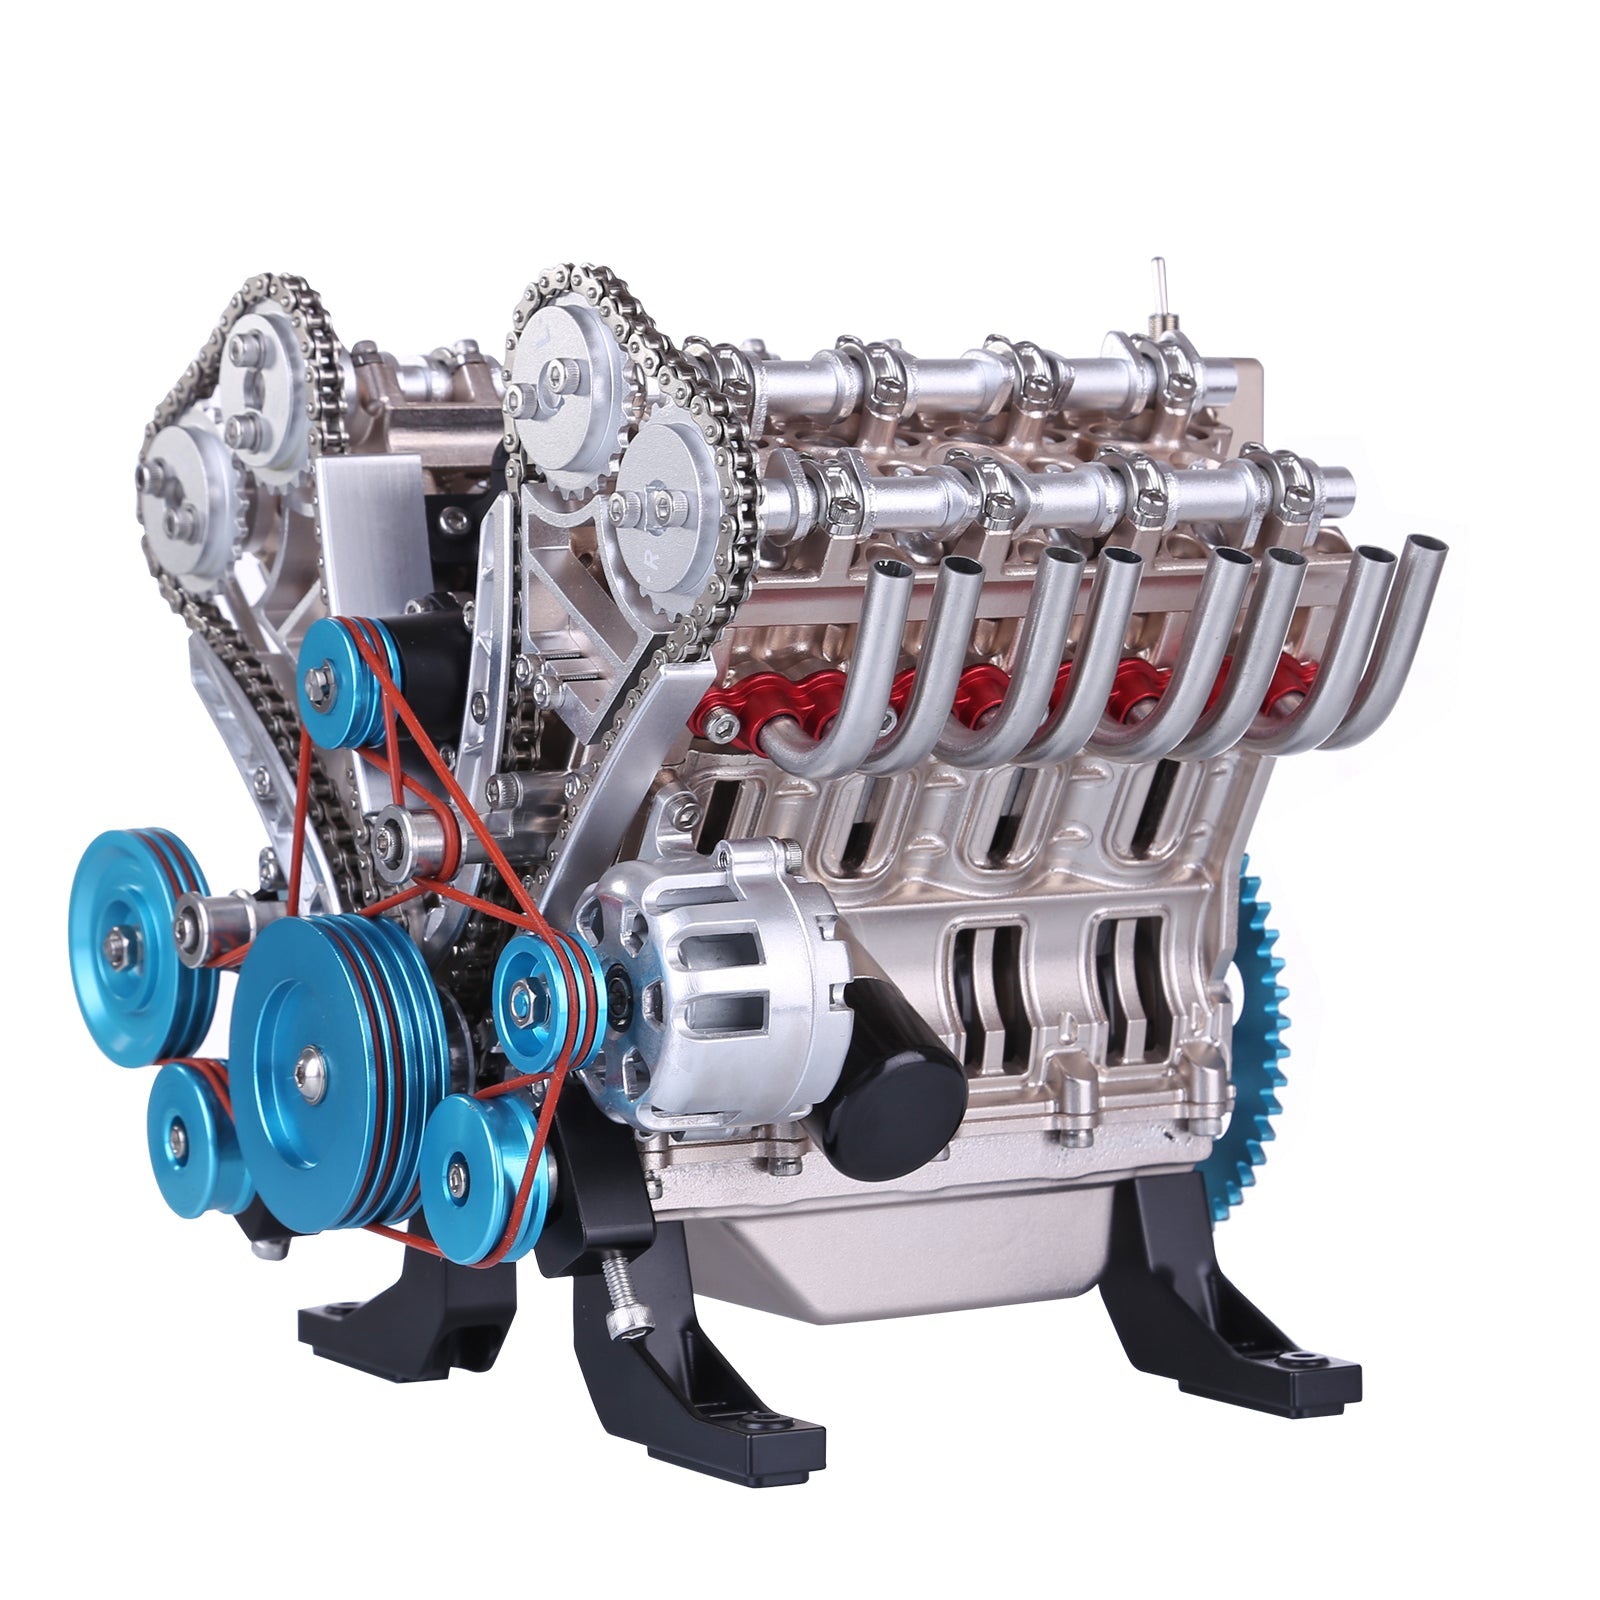 TECHING V8 Engine Model Kit - Construya su propio motor V8 que funcione